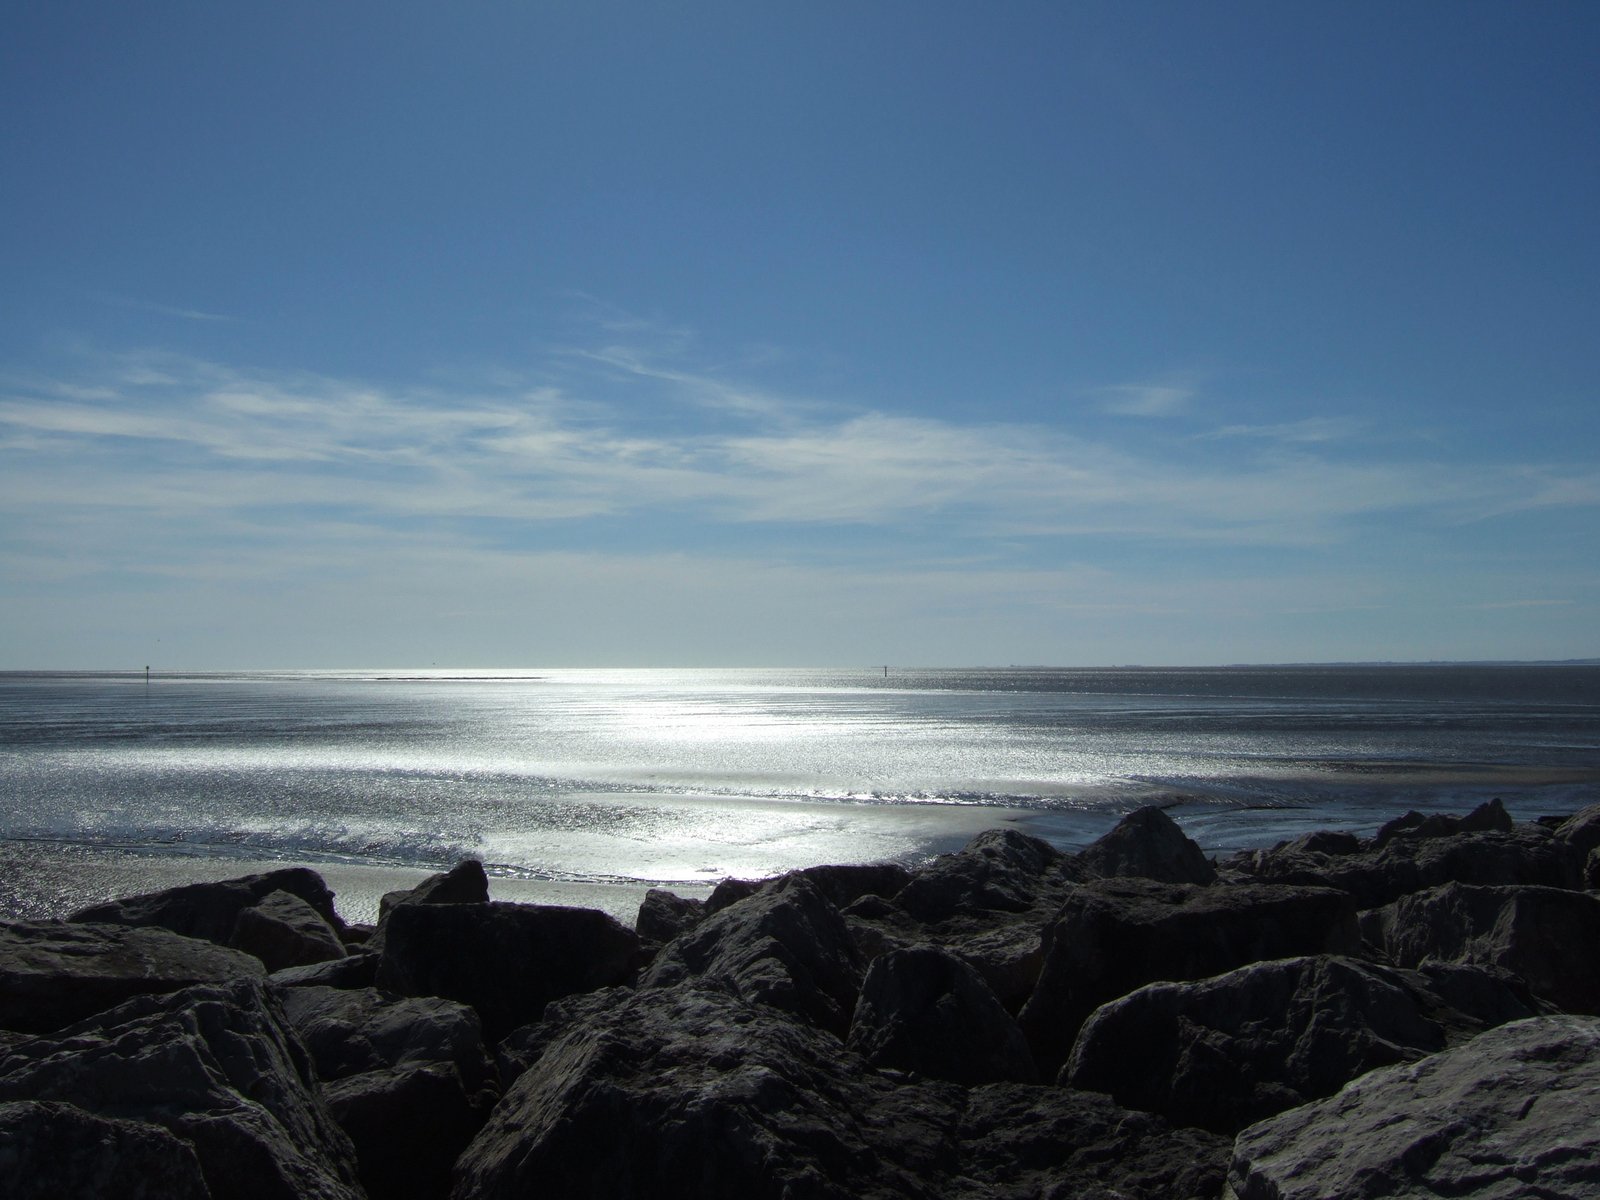 view of a calm sea off of a rocky coast